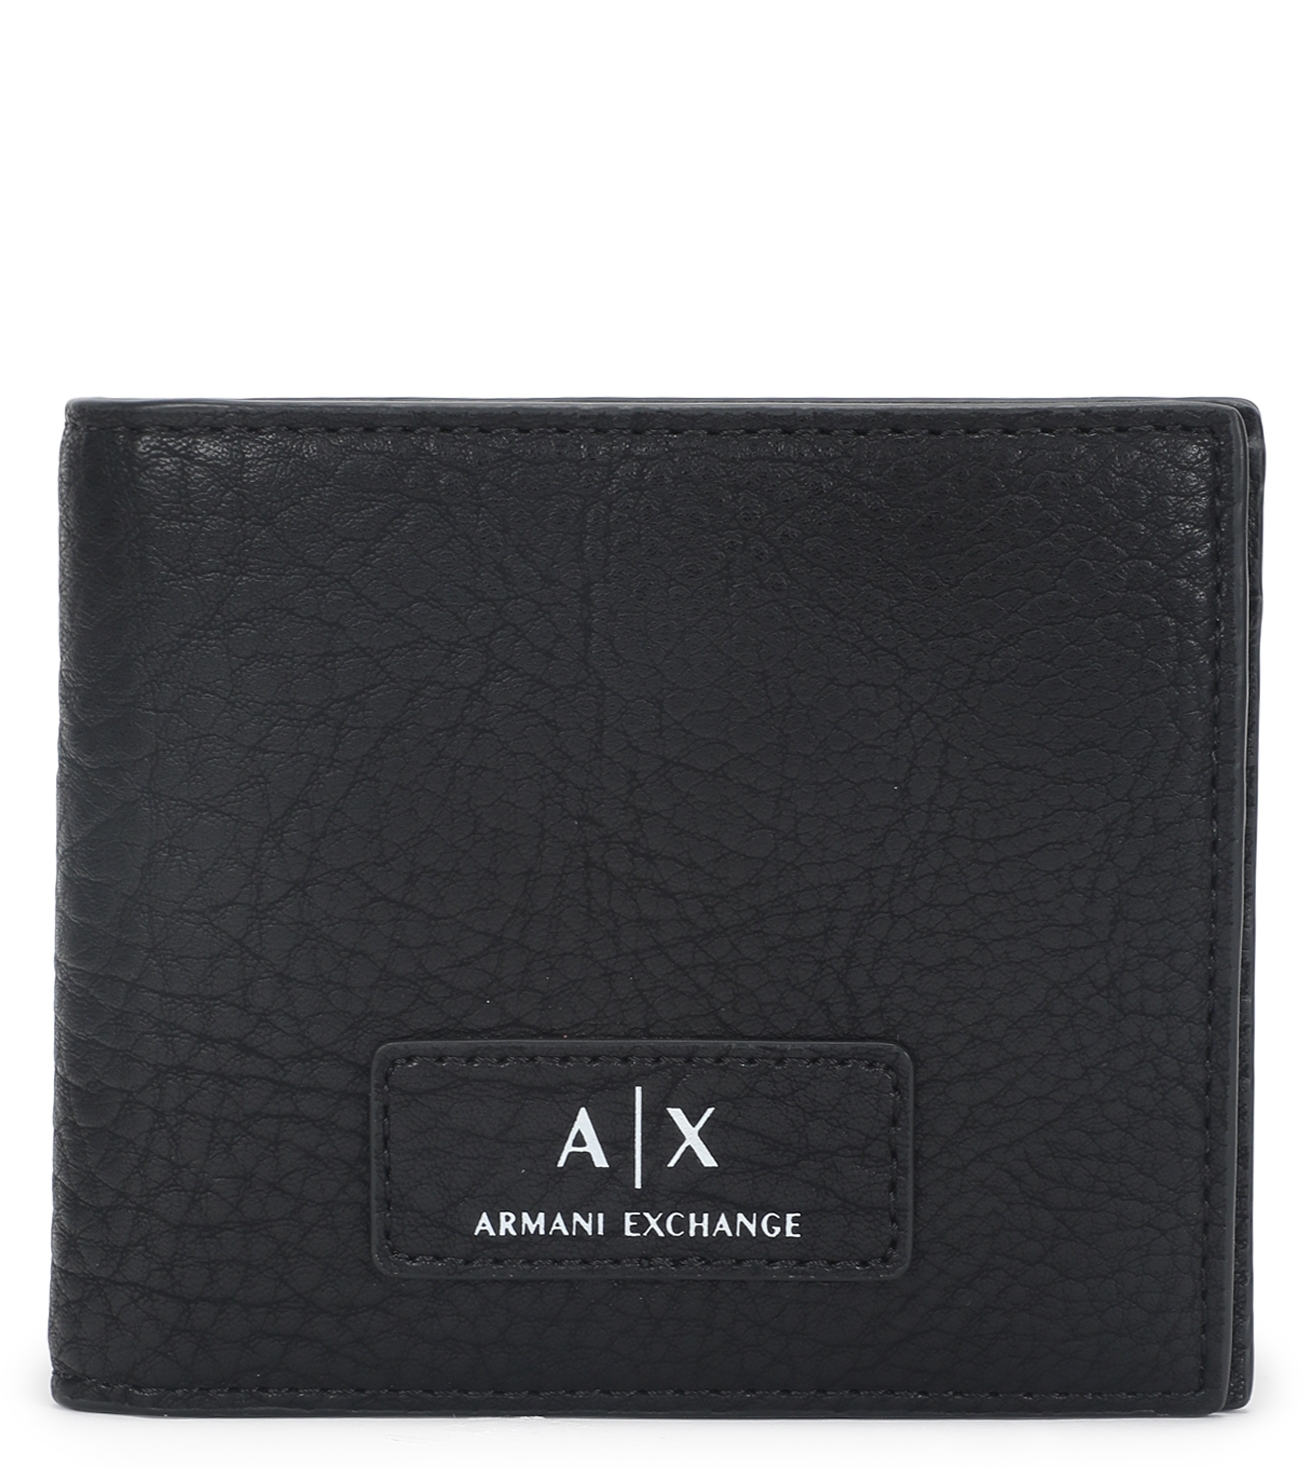 ARMANI EXCHANGE: Wallet men - Black | ARMANI EXCHANGE wallet 9585013F867  online at GIGLIO.COM